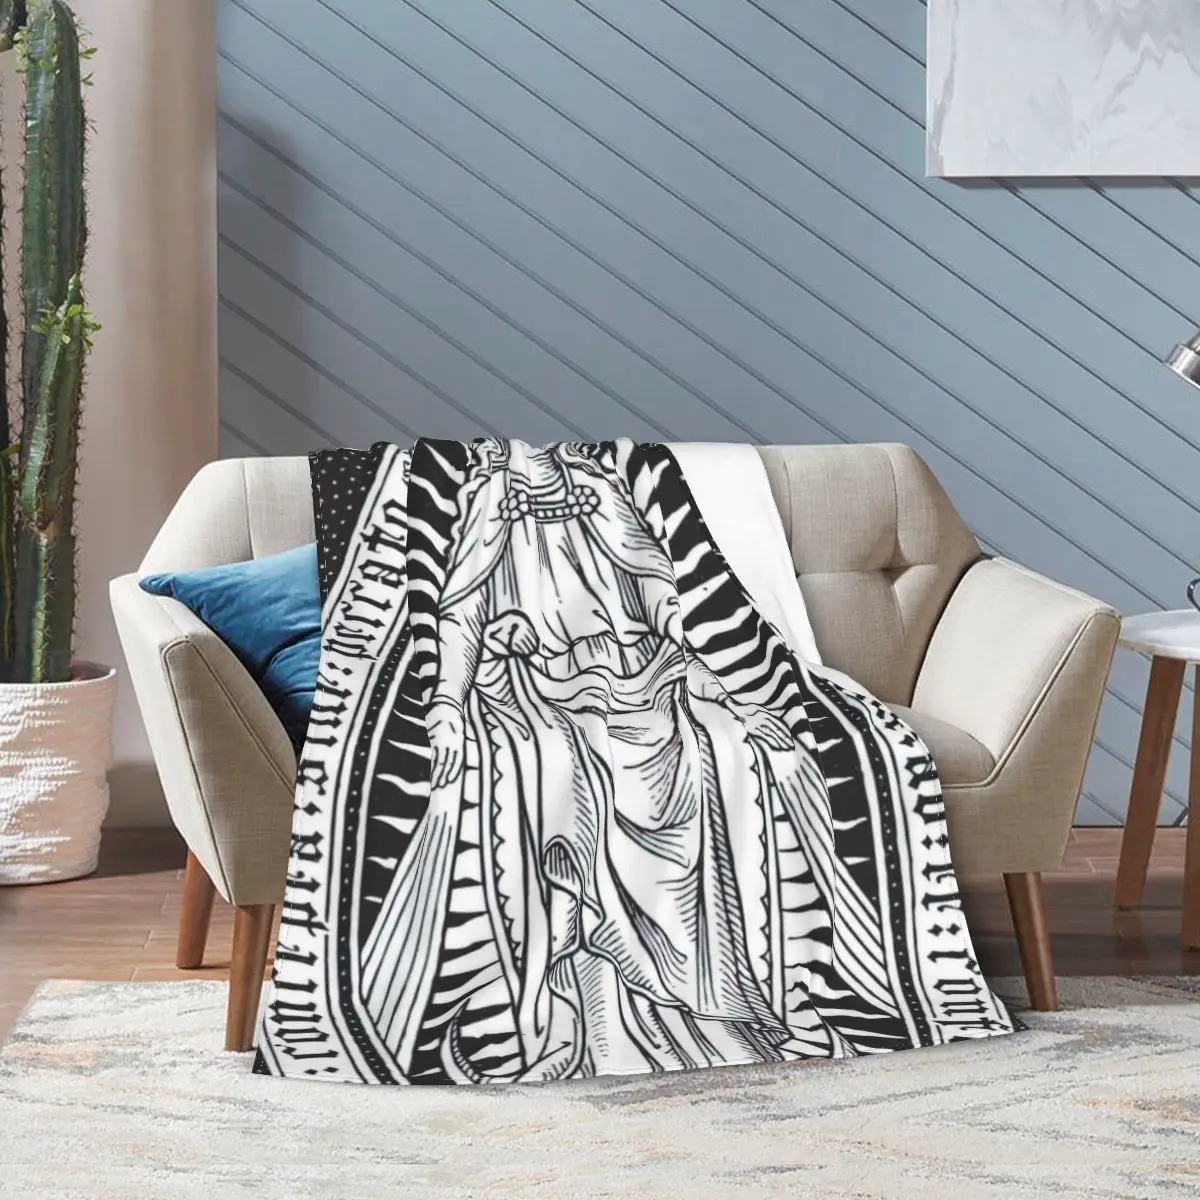 

Virgin Mary Flannel Fleece Blanket For Kids Teens Adults Soft Cozy Warm Fuzzy